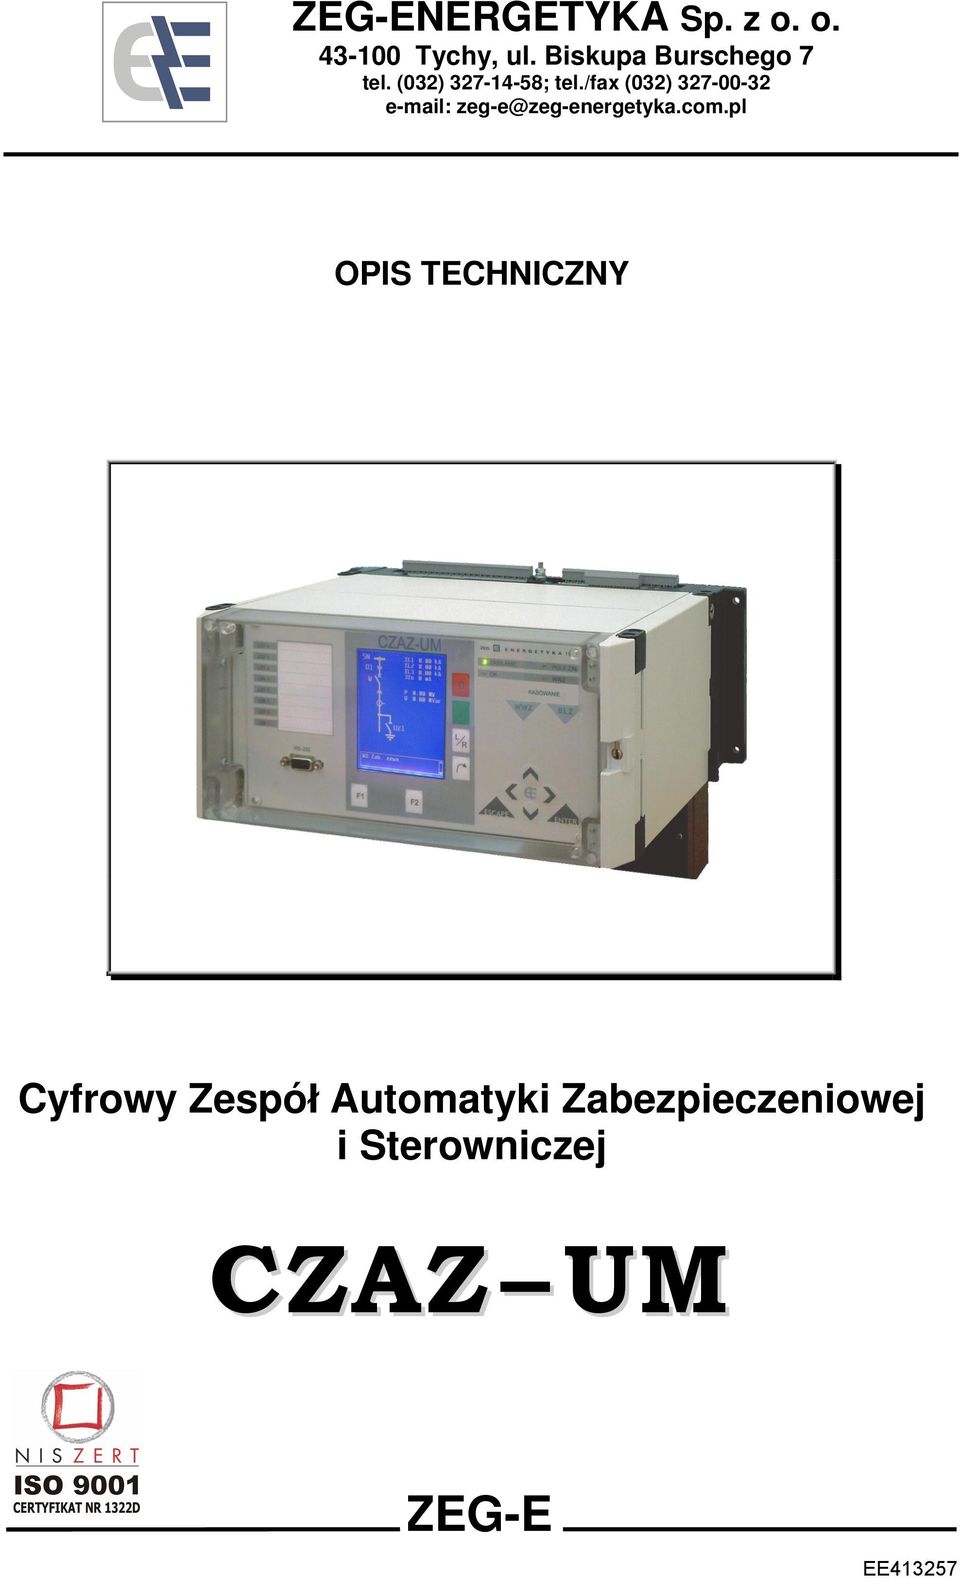 /fax (032) 327-00-32 e-mail: zeg-e@zeg-energetyka.com.